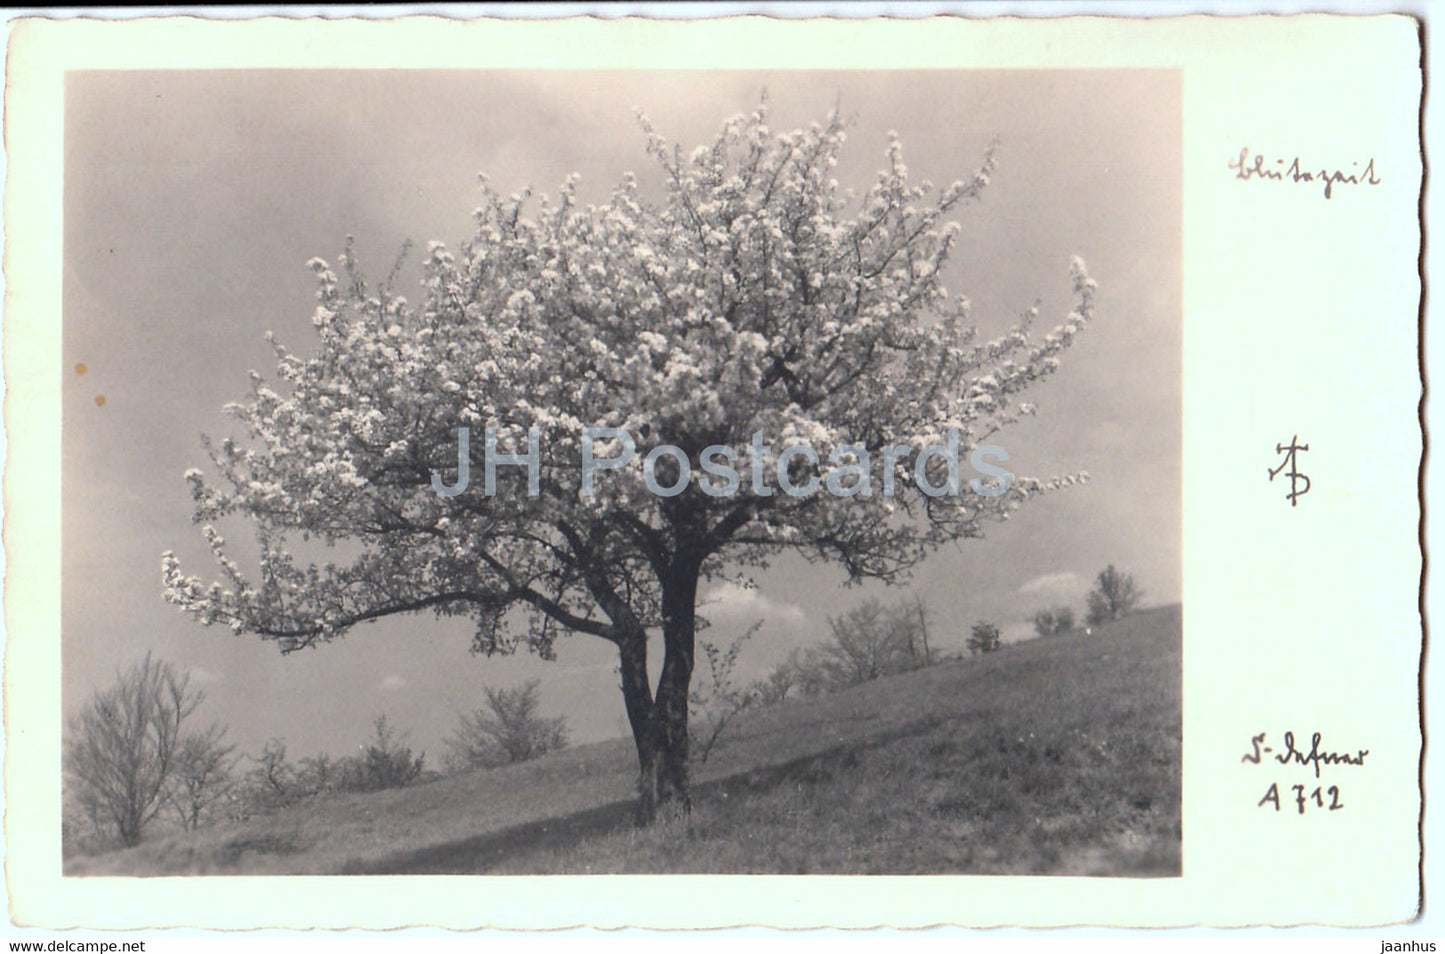 Blutezeit - blossom - A. Defner - old postcard - 1941 - Austria - used - JH Postcards